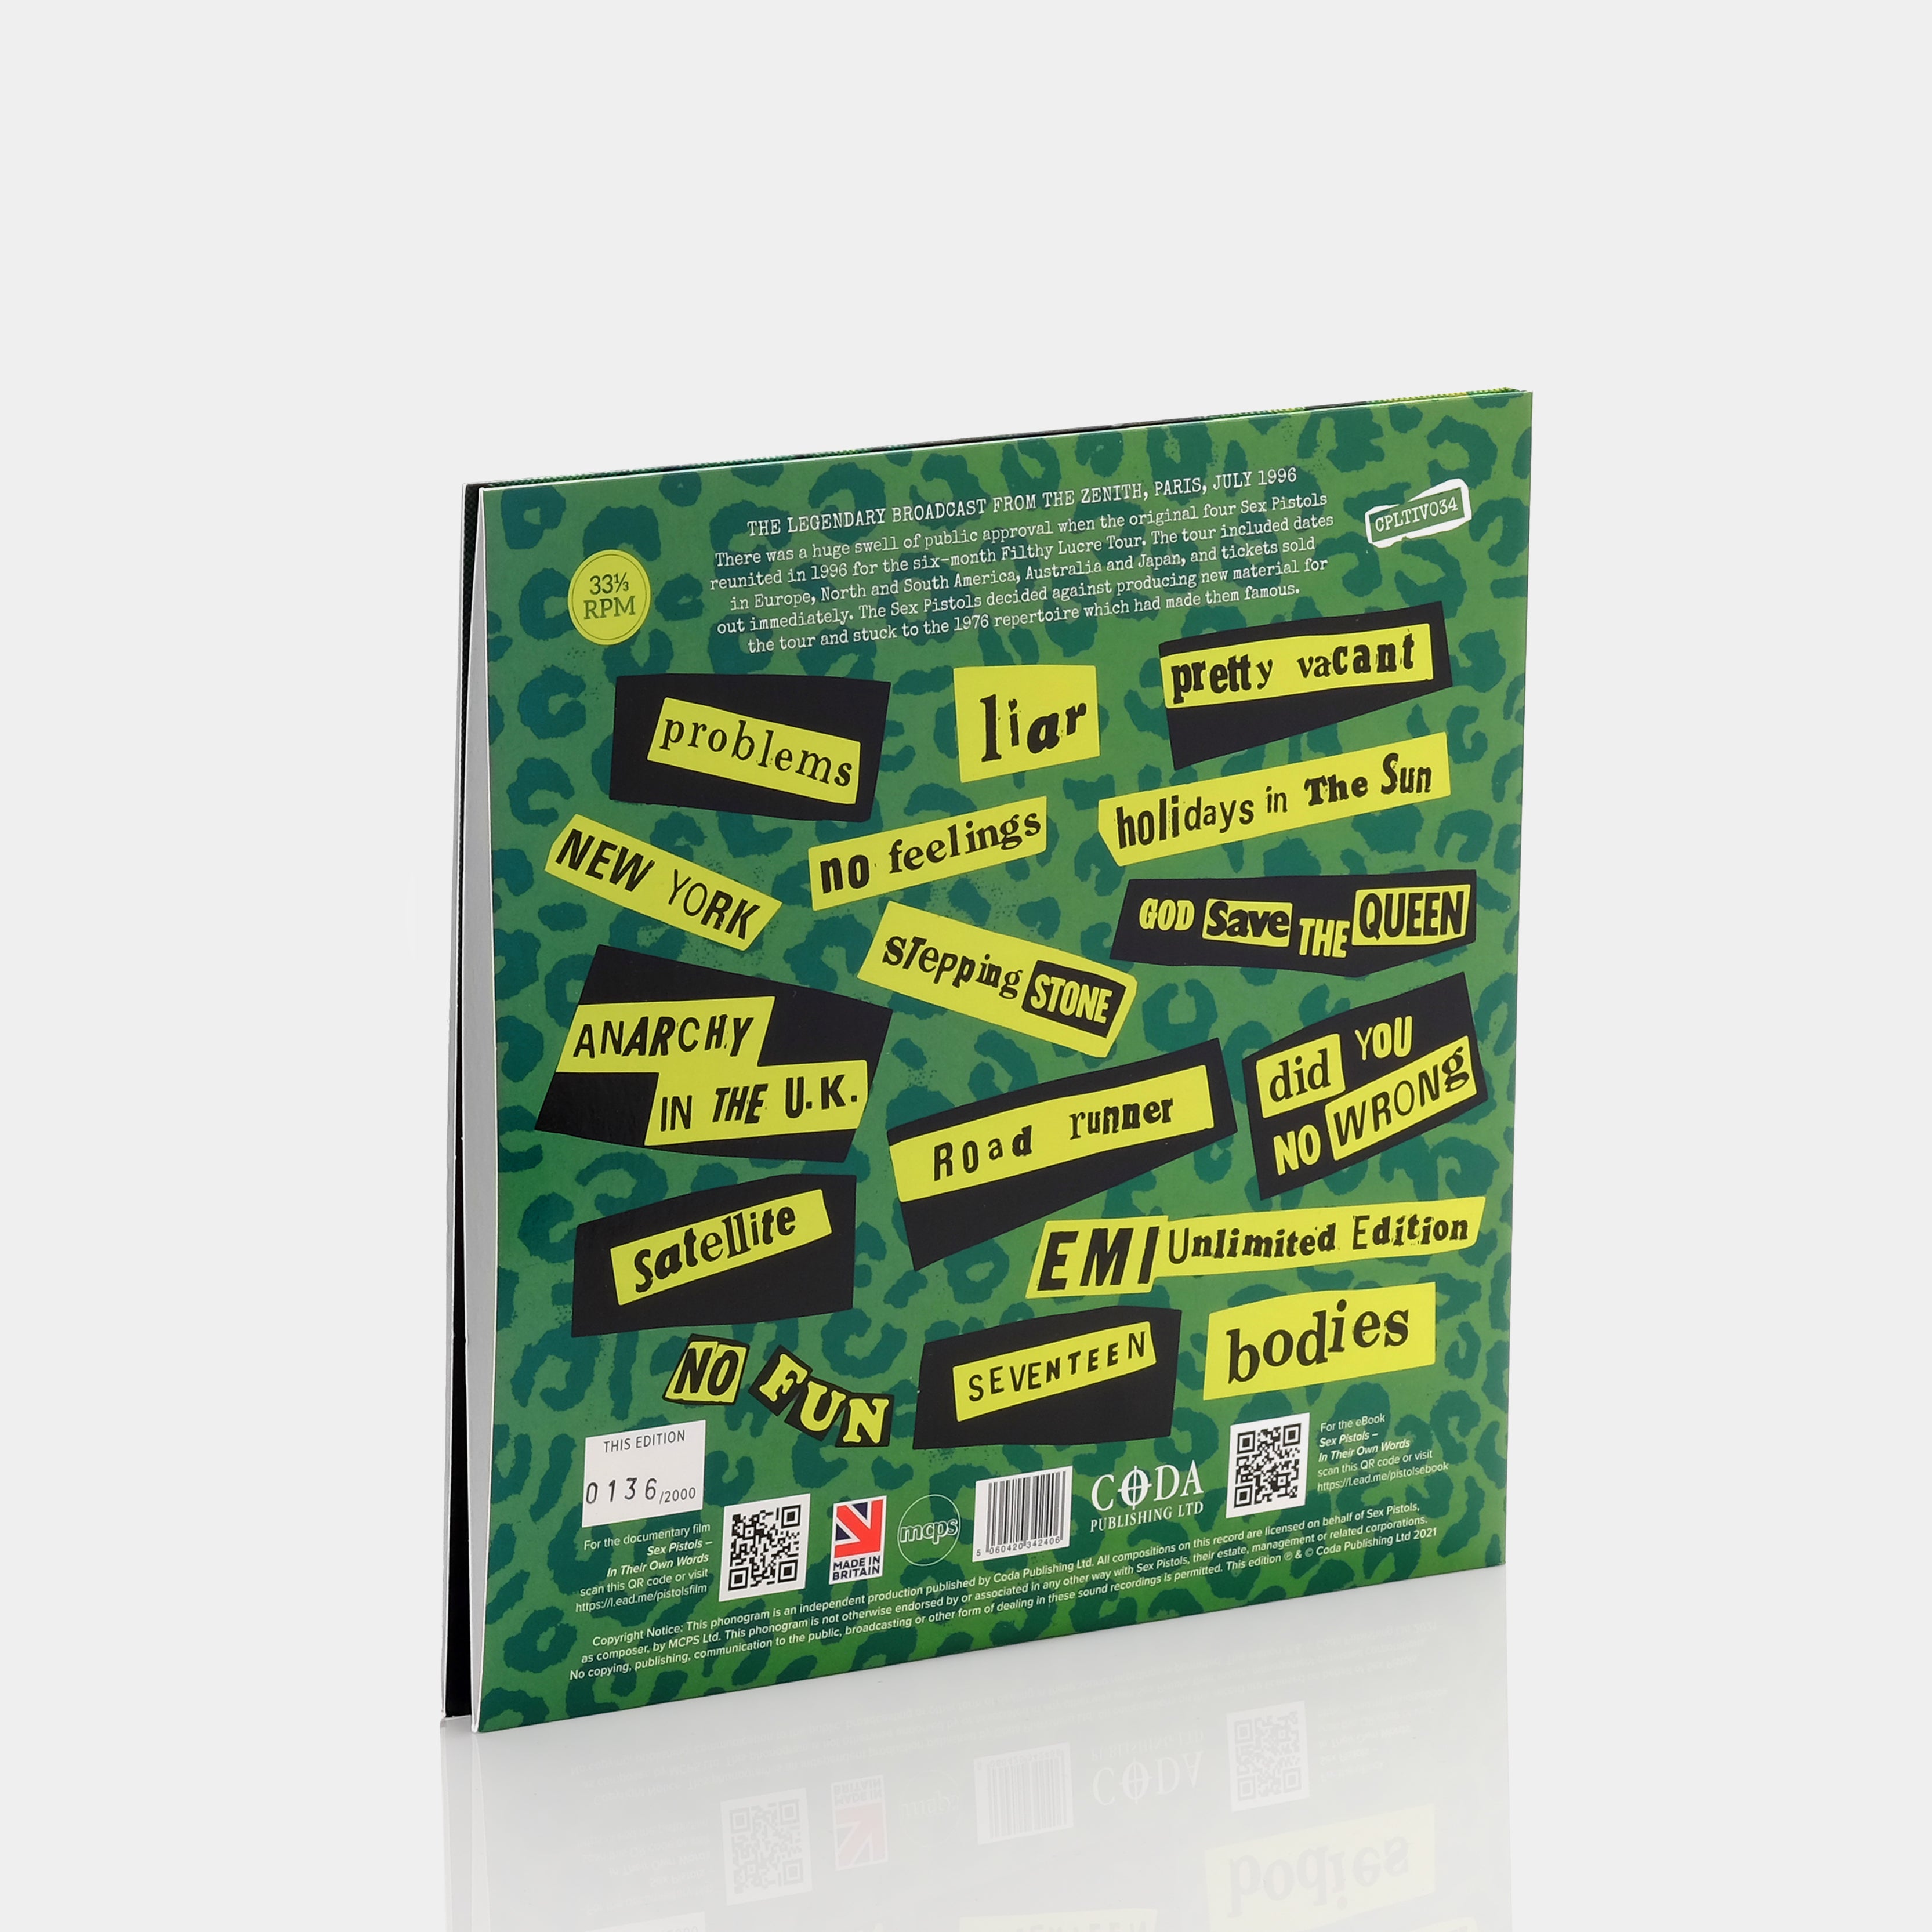 Sex Pistols - Same Old Ten Inch Bollocks In Paris 2x10" Dayglo Green Vinyl Record